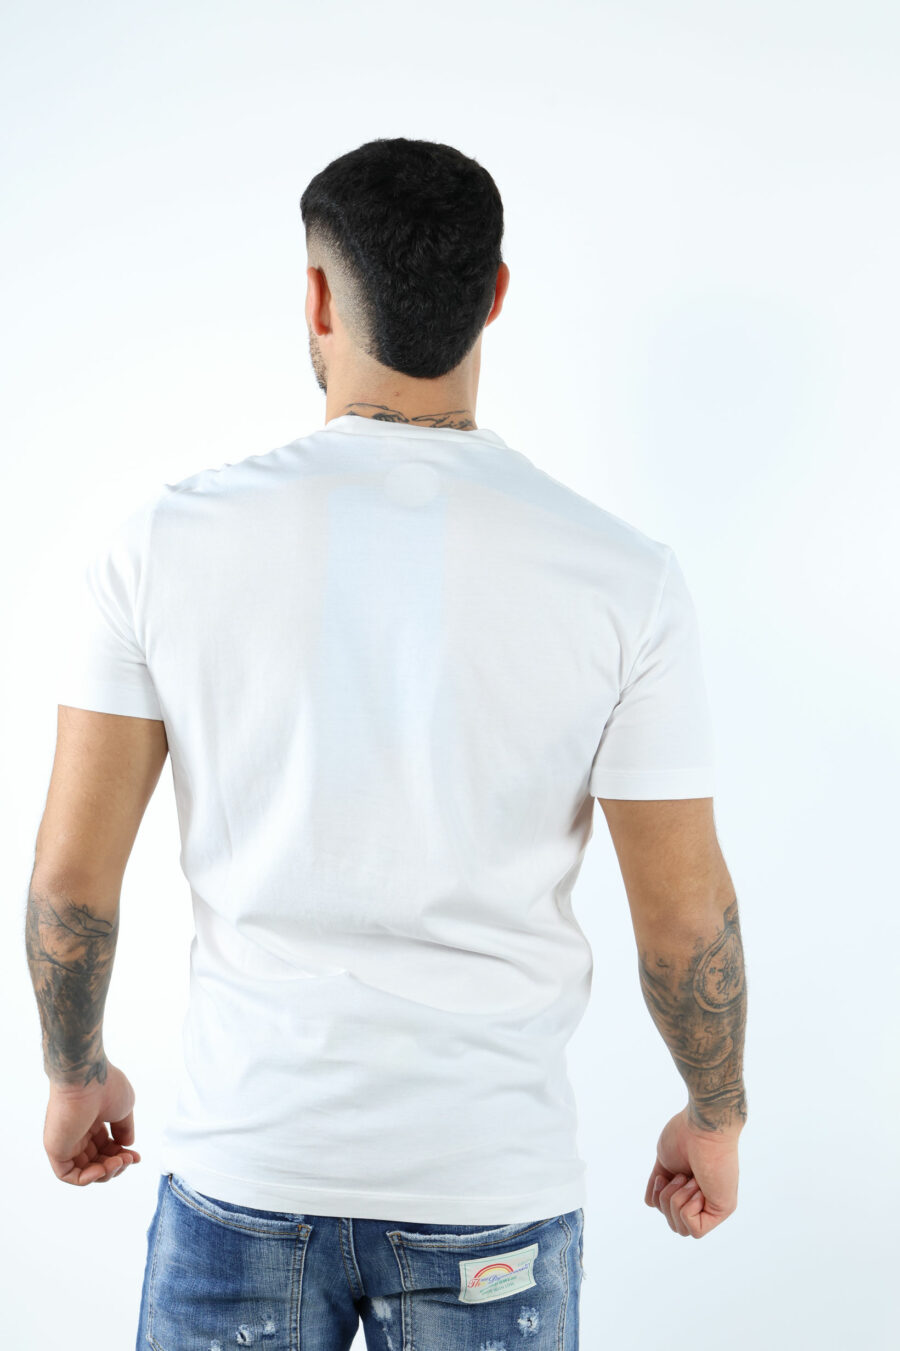 T-shirt branca com maxilogo "ceresio 9, milano" - 106684